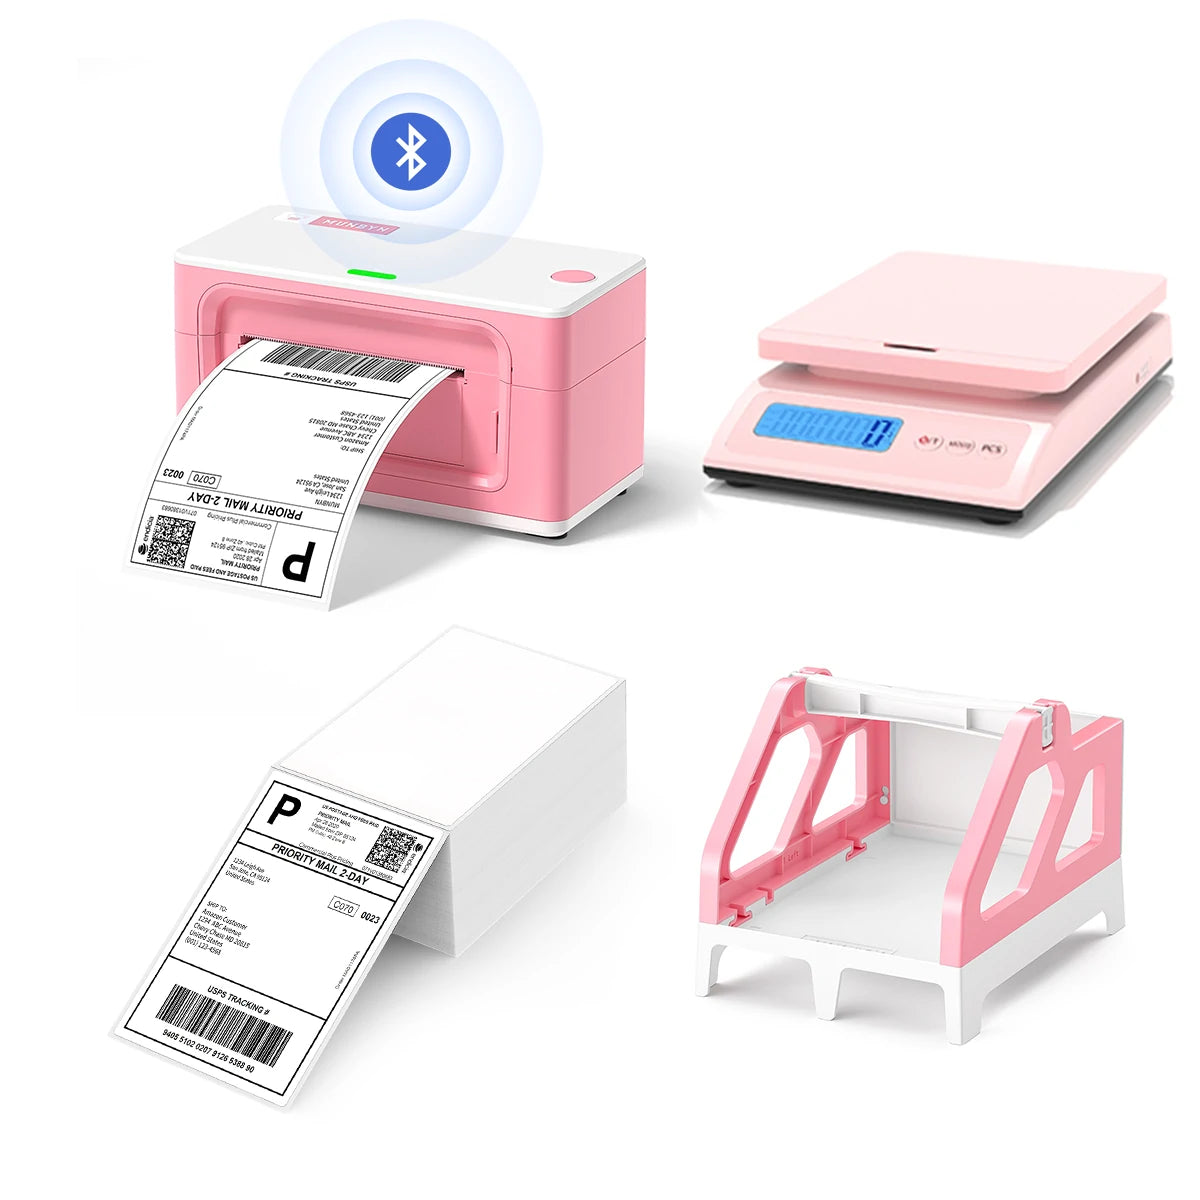 MUNBYN® Wireless/USB Thermal Label Printers